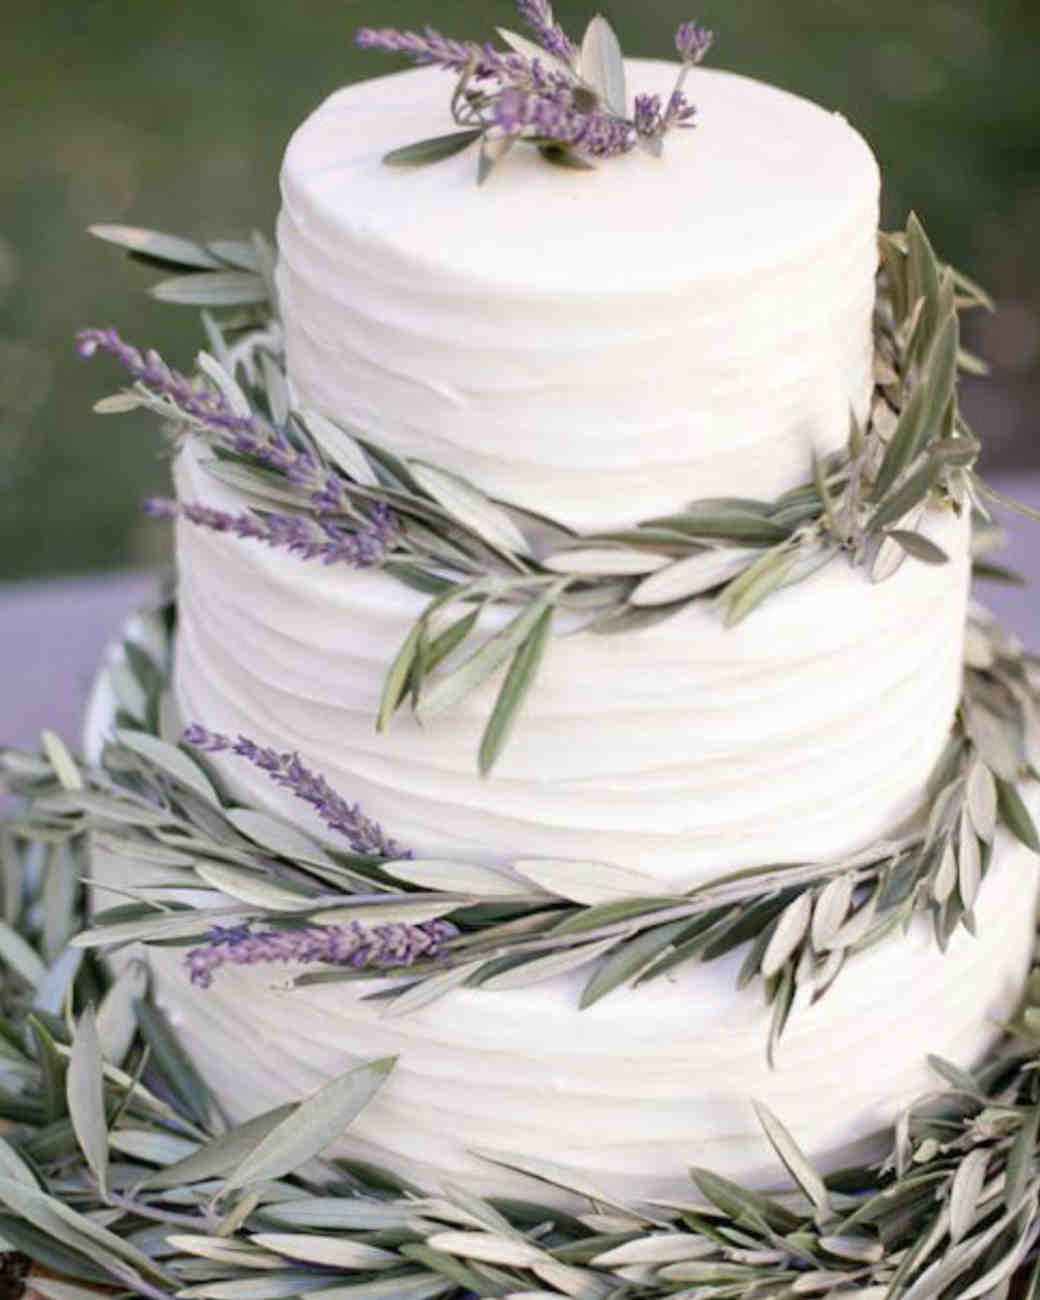 Vegan Wedding Cake Recipes
 7 Delicious Vegan Wedding Cakes